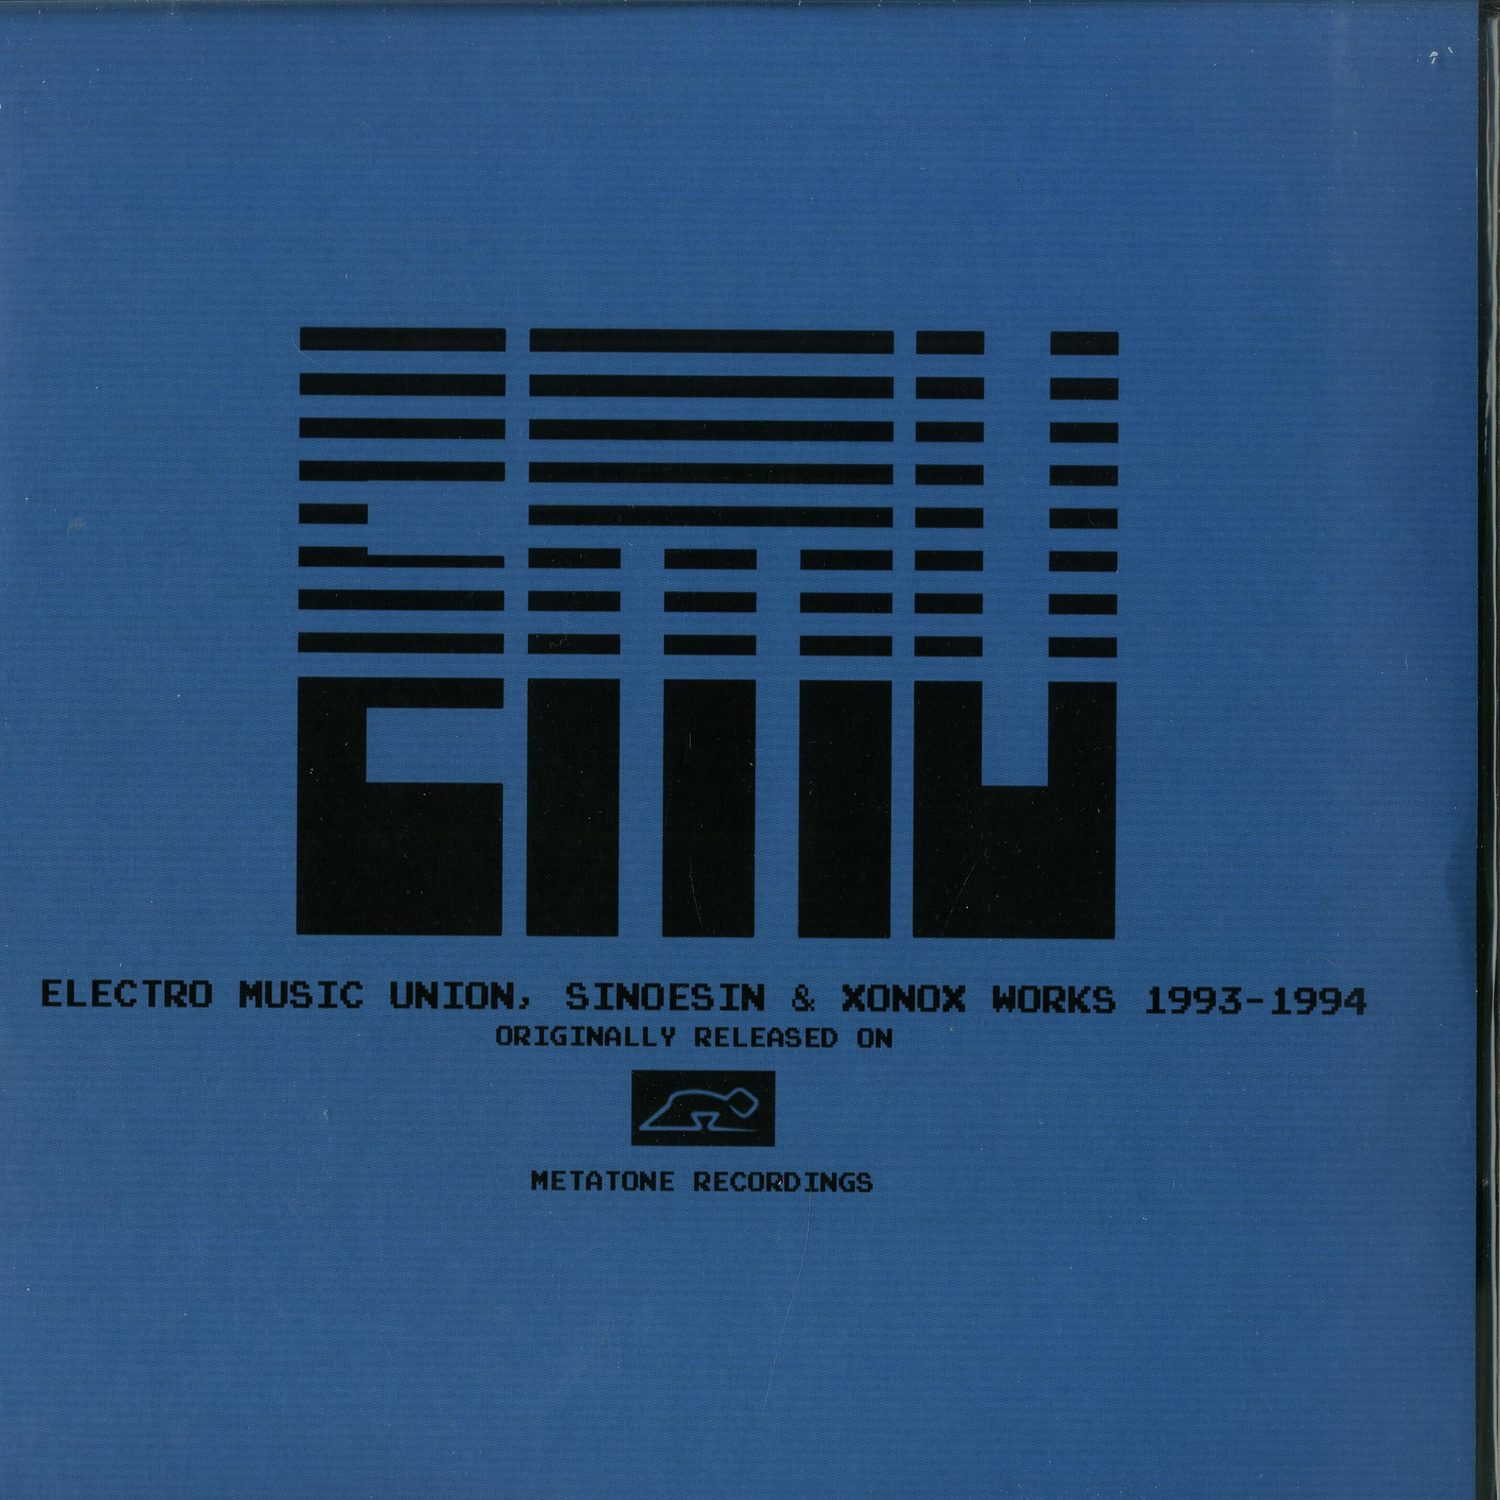 E.M.U. - ELECTRO MUSIC UNION, SINOESIN & XONOX WORKS 1993 - 1994 